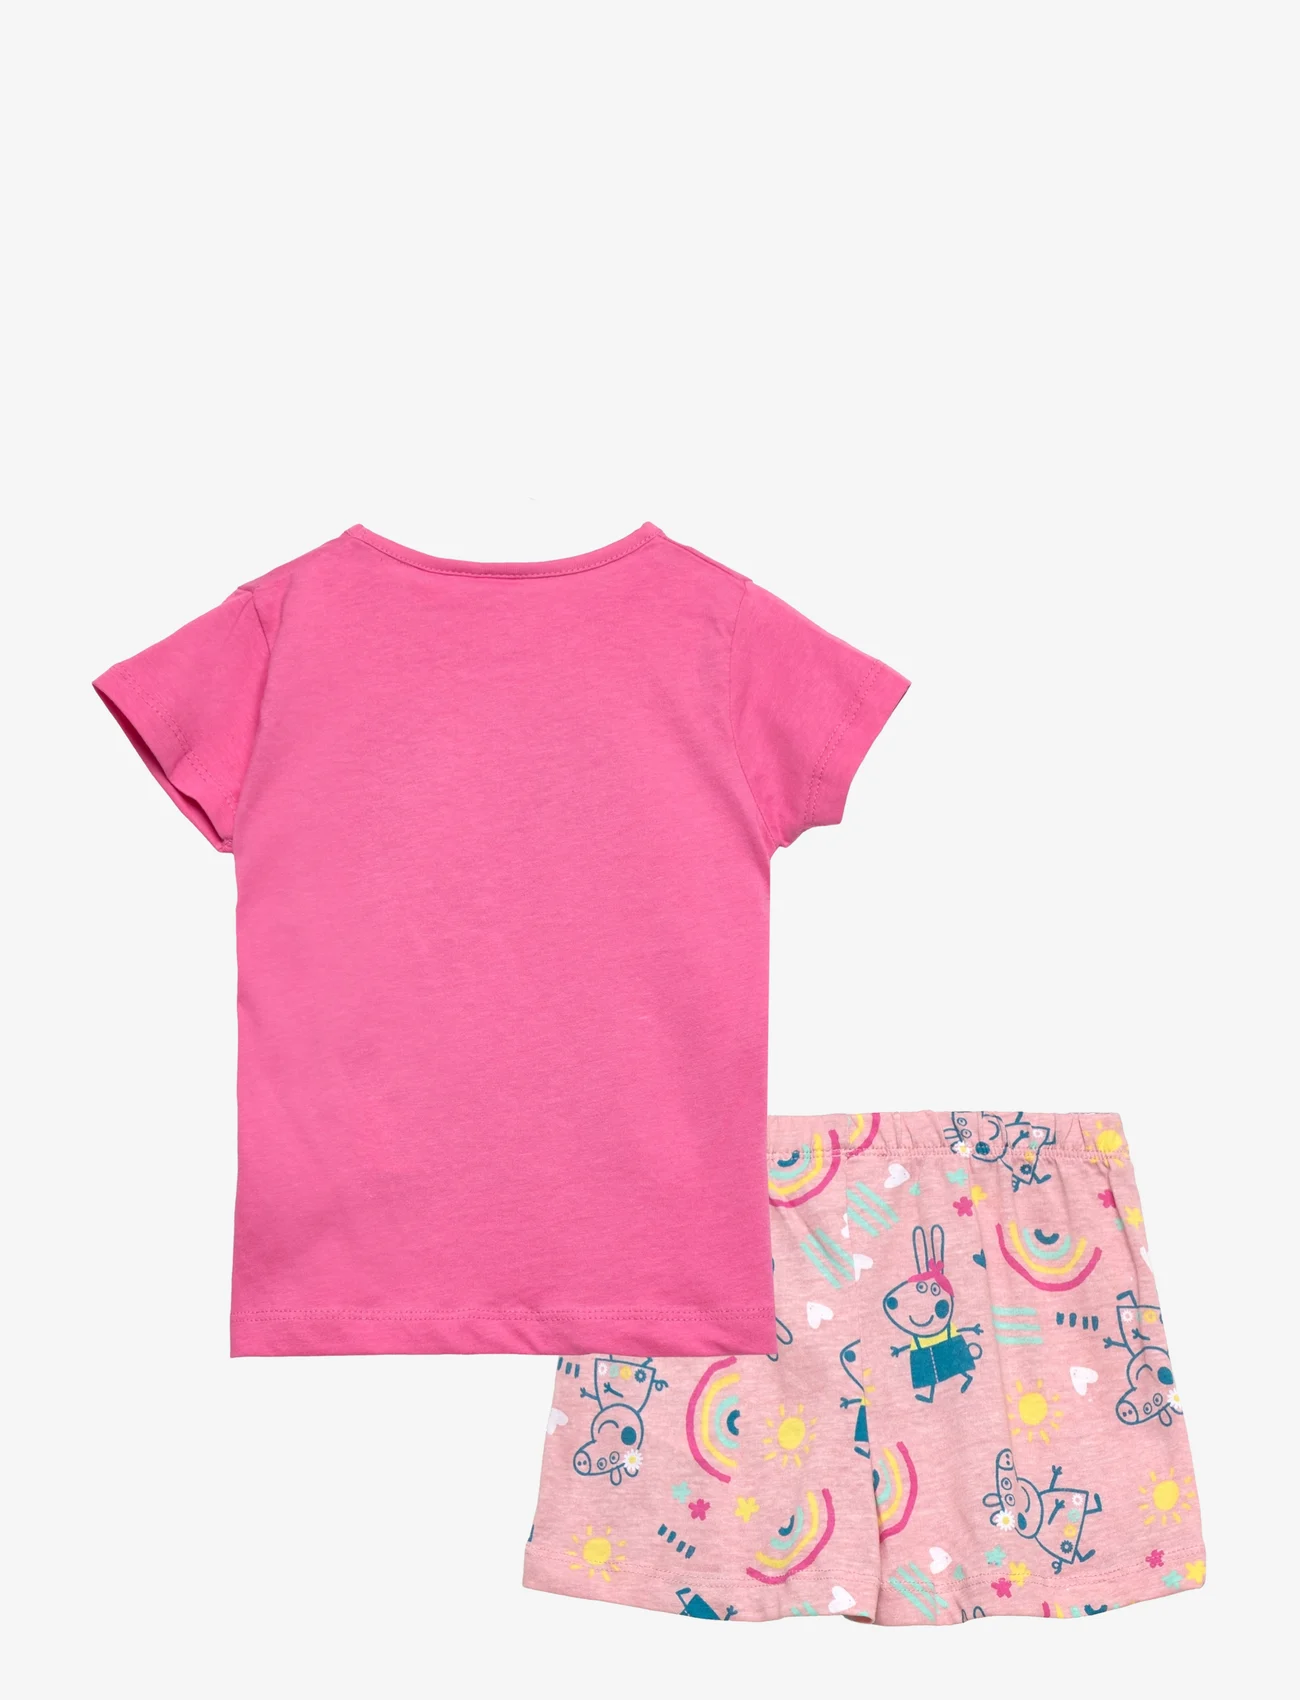 Peppa Pig - Set Pyjalong - pyjamasset - pink - 1